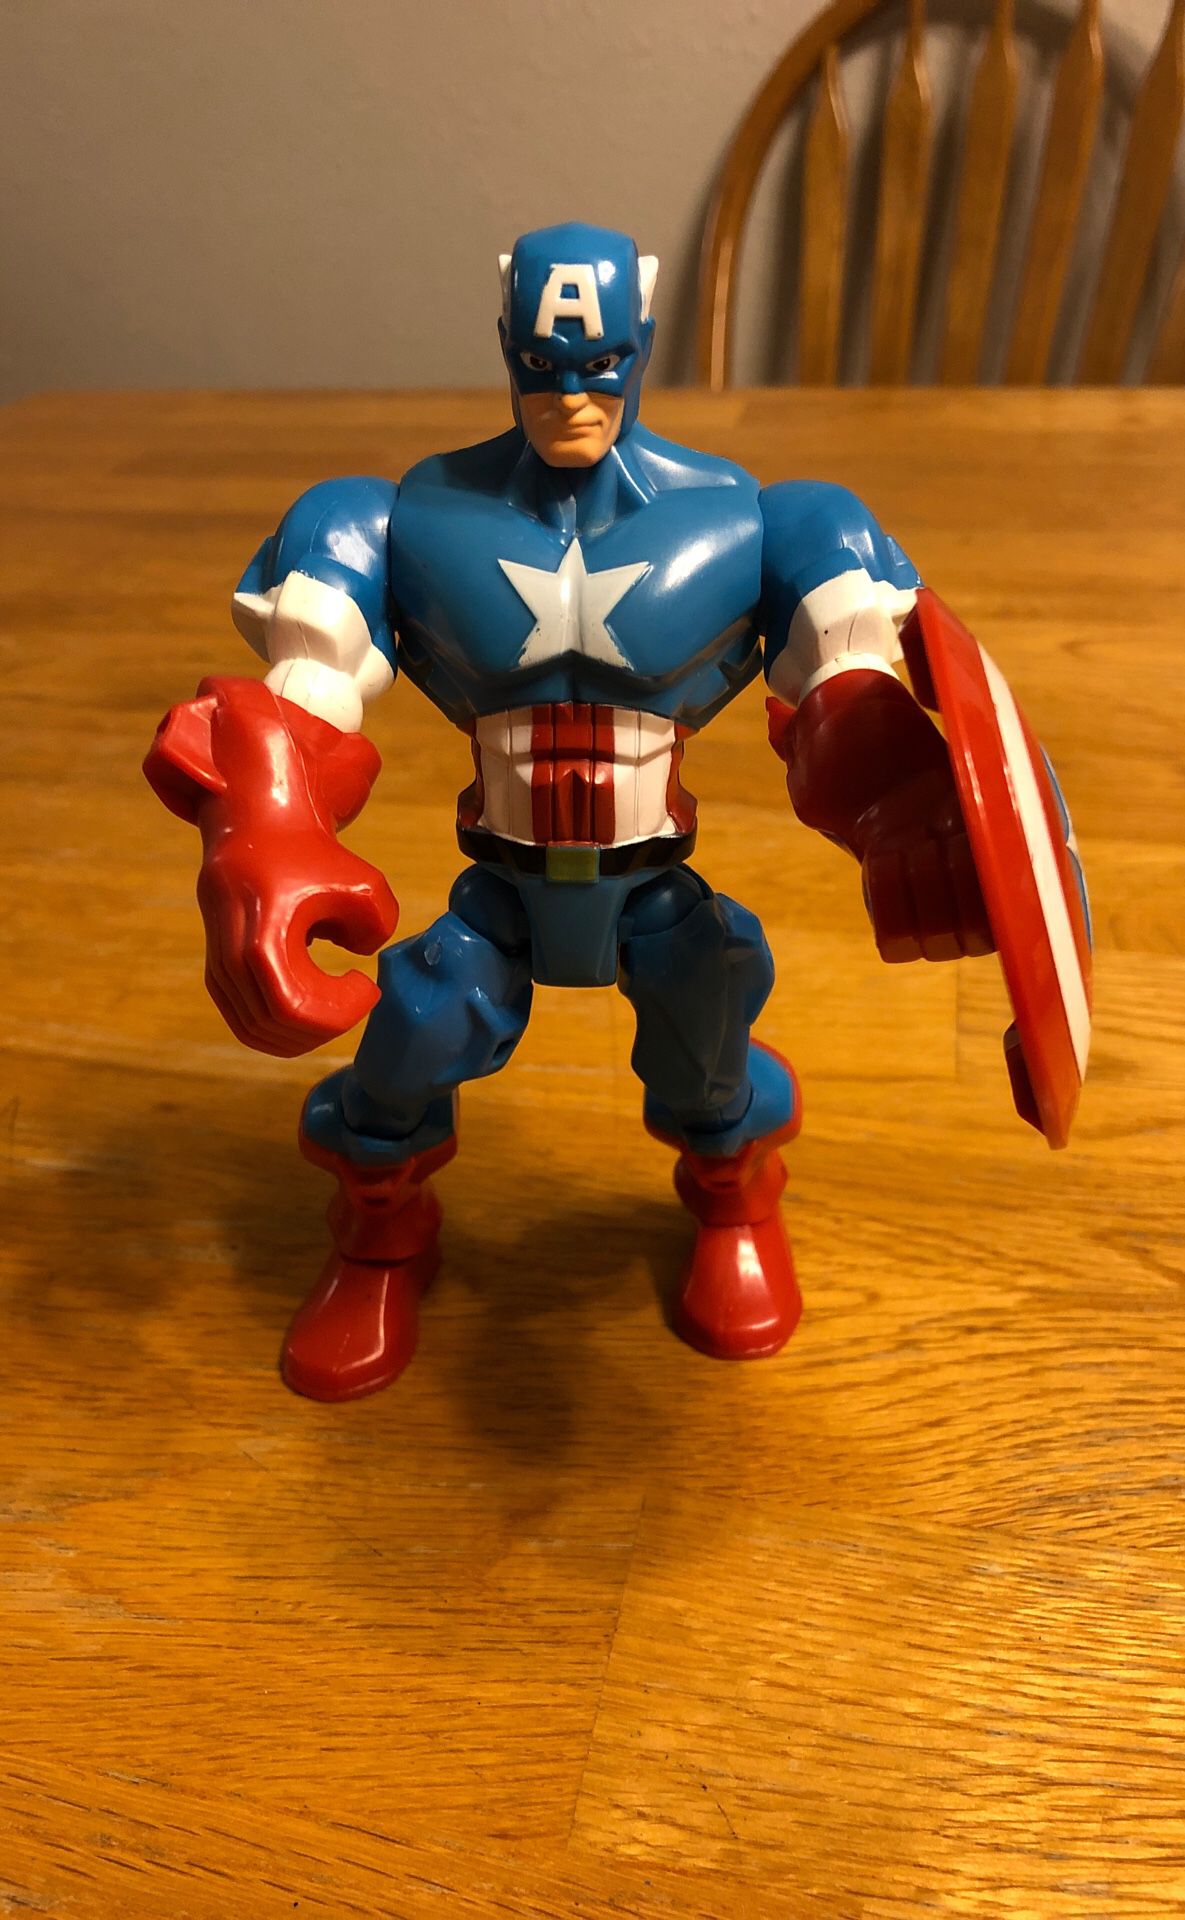 Has to Captain America figure